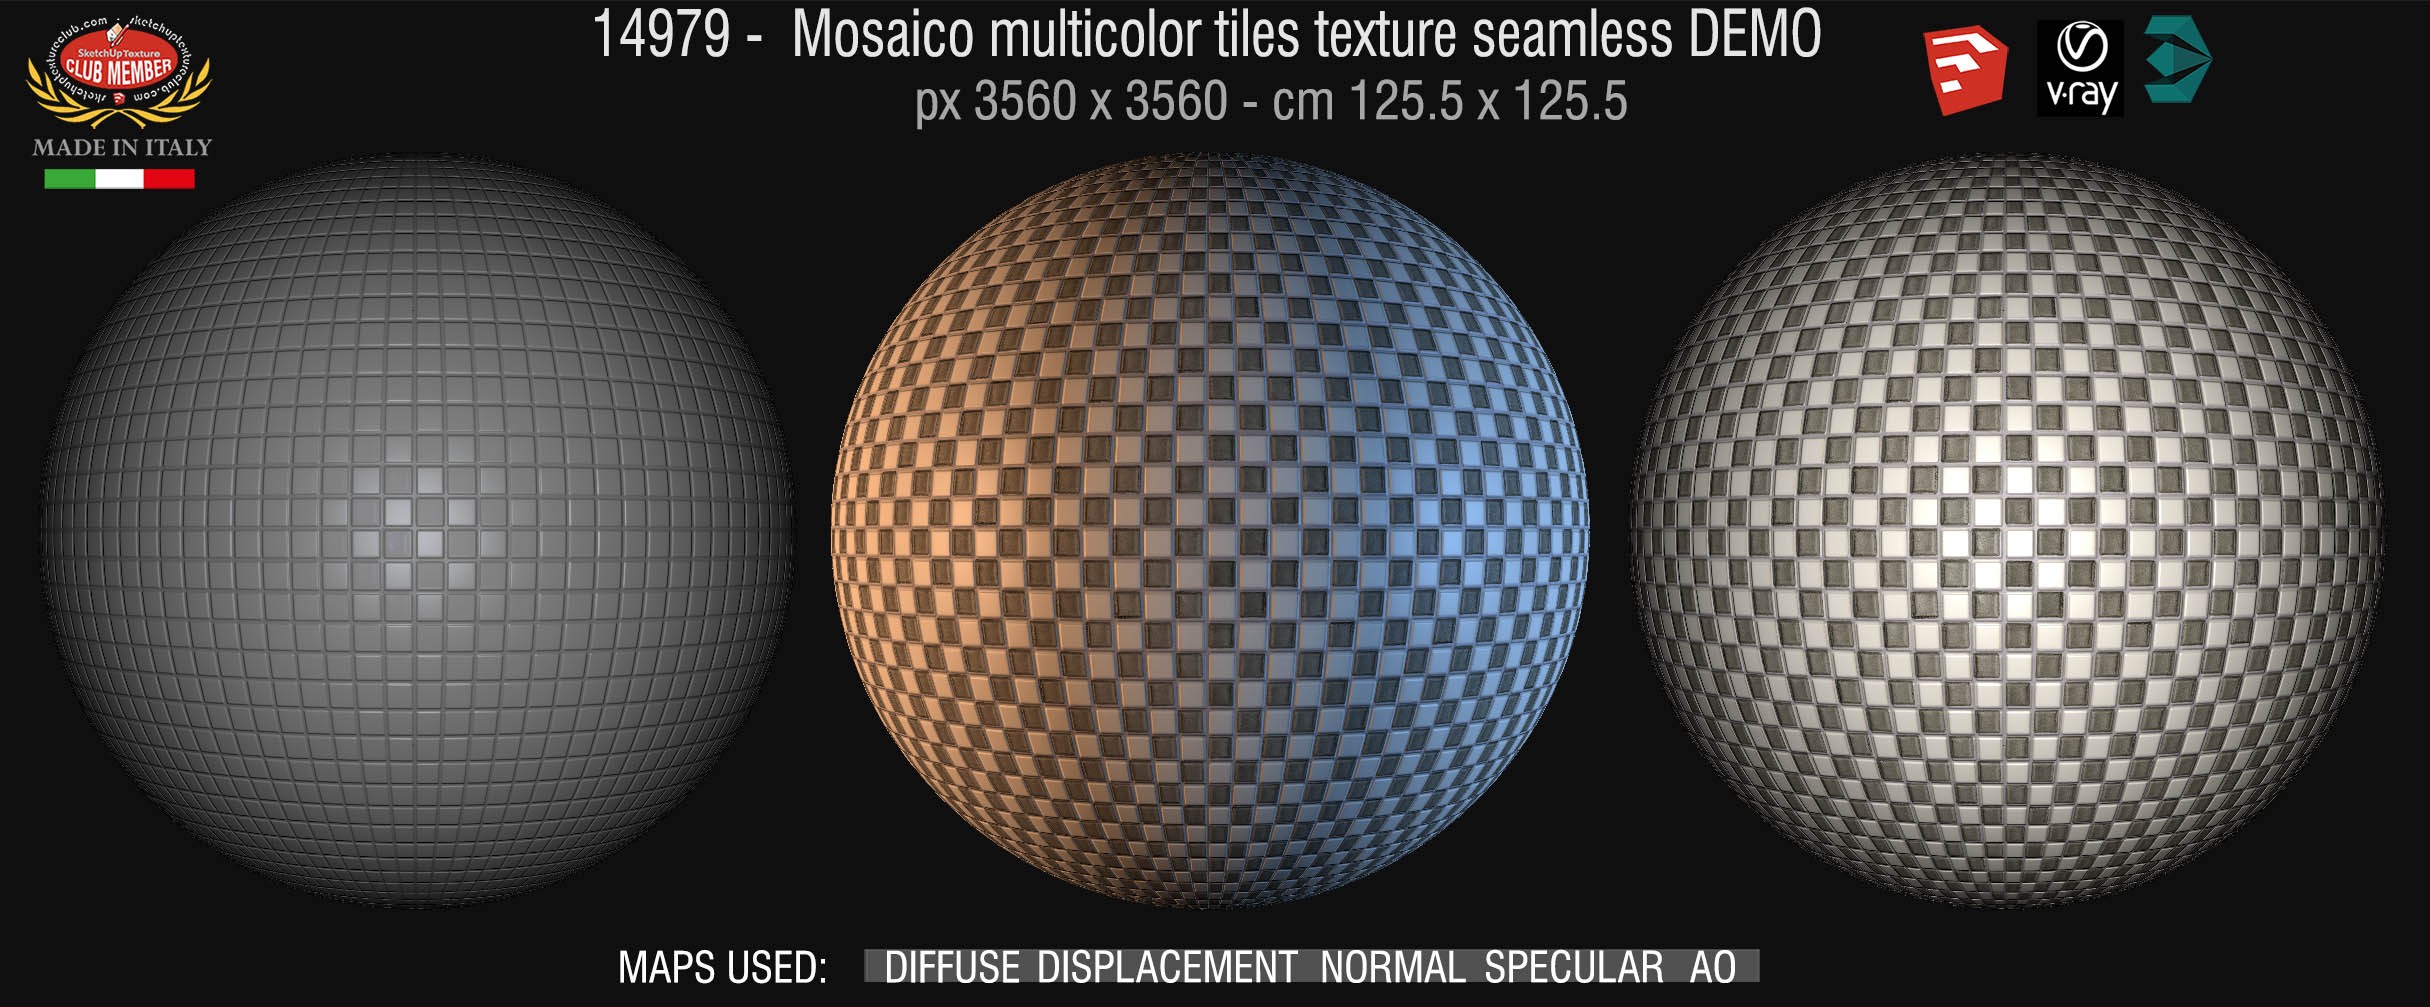 14979 Mosaico multicolor tiles texture seamless + maps DEMO